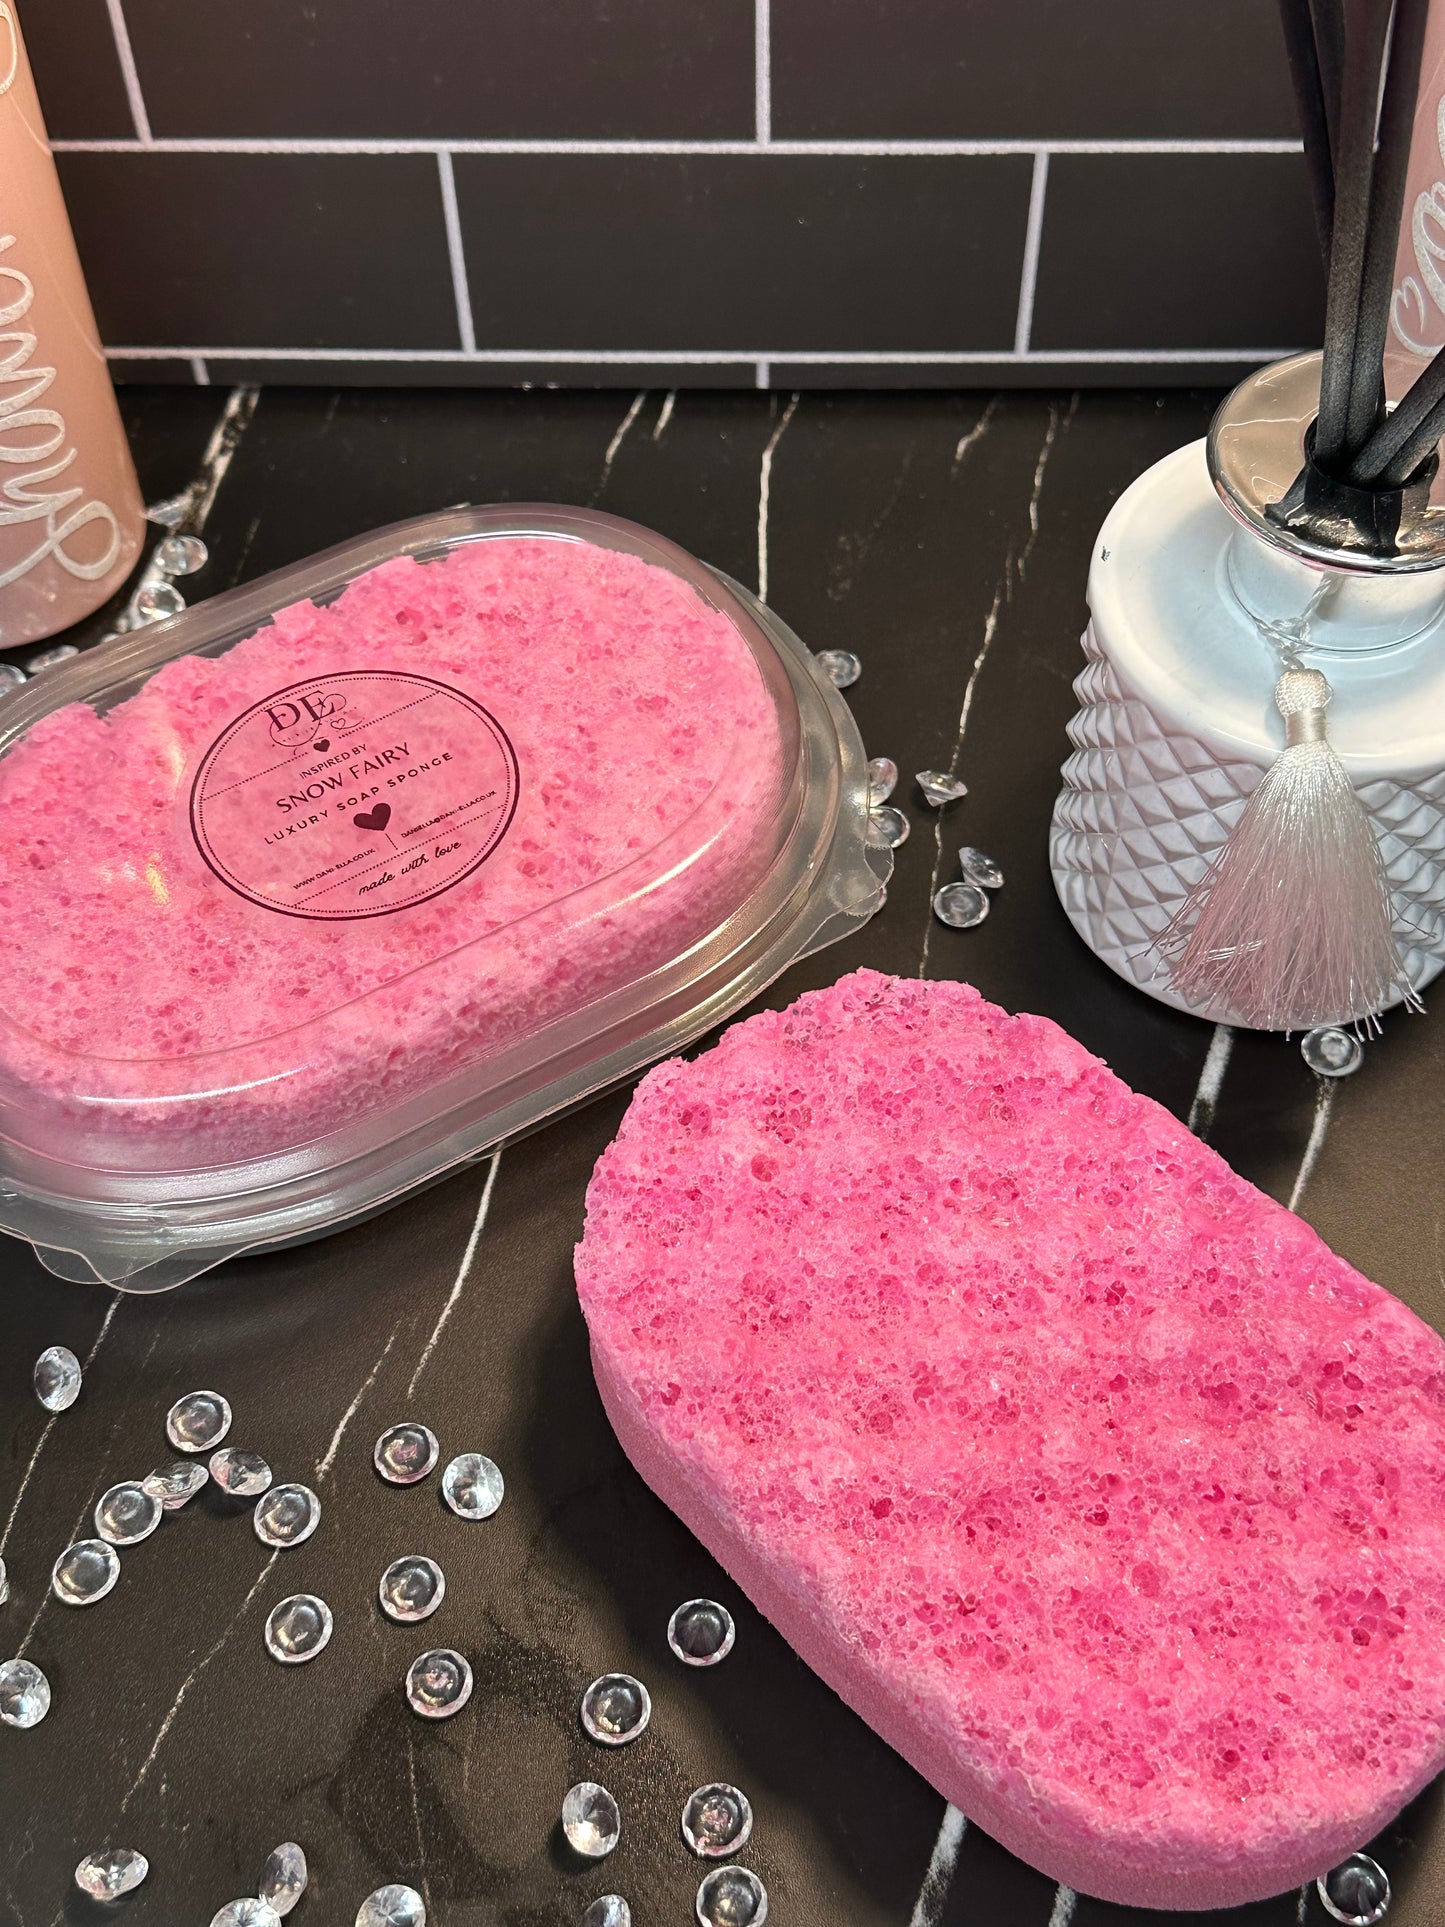 BATH & Body Exfoliating Smooth Luxury Soap Sponge - Inspired by Snow Fairy